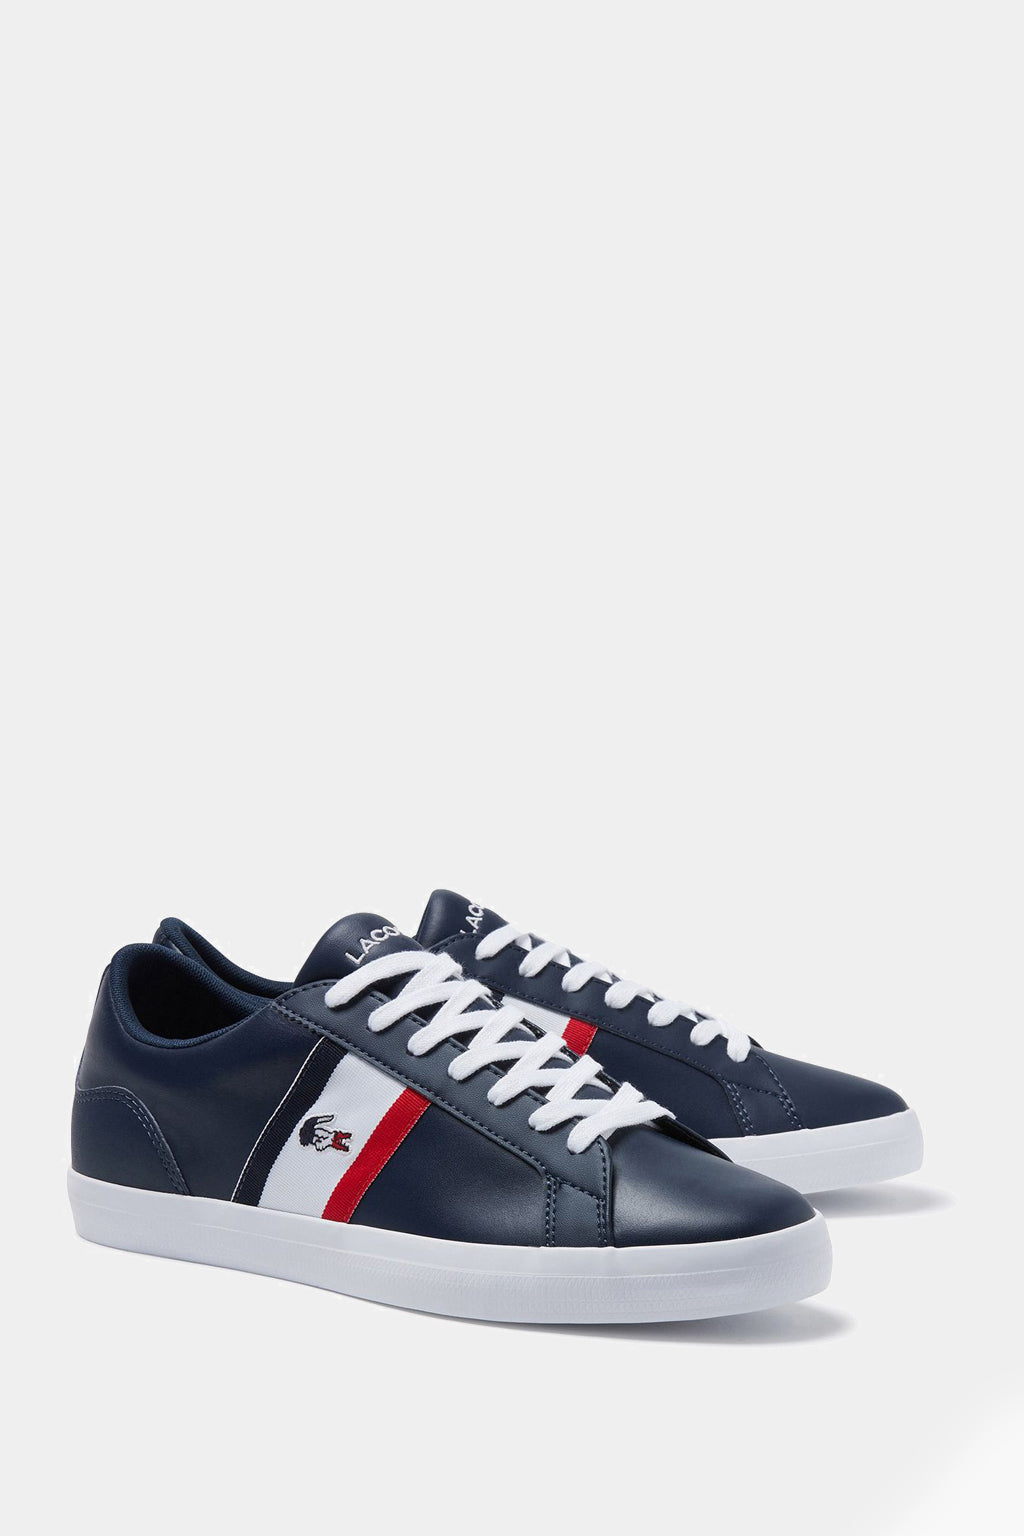 Lacoste - Lerond Tri22 Navy Men's Leather Sneaker